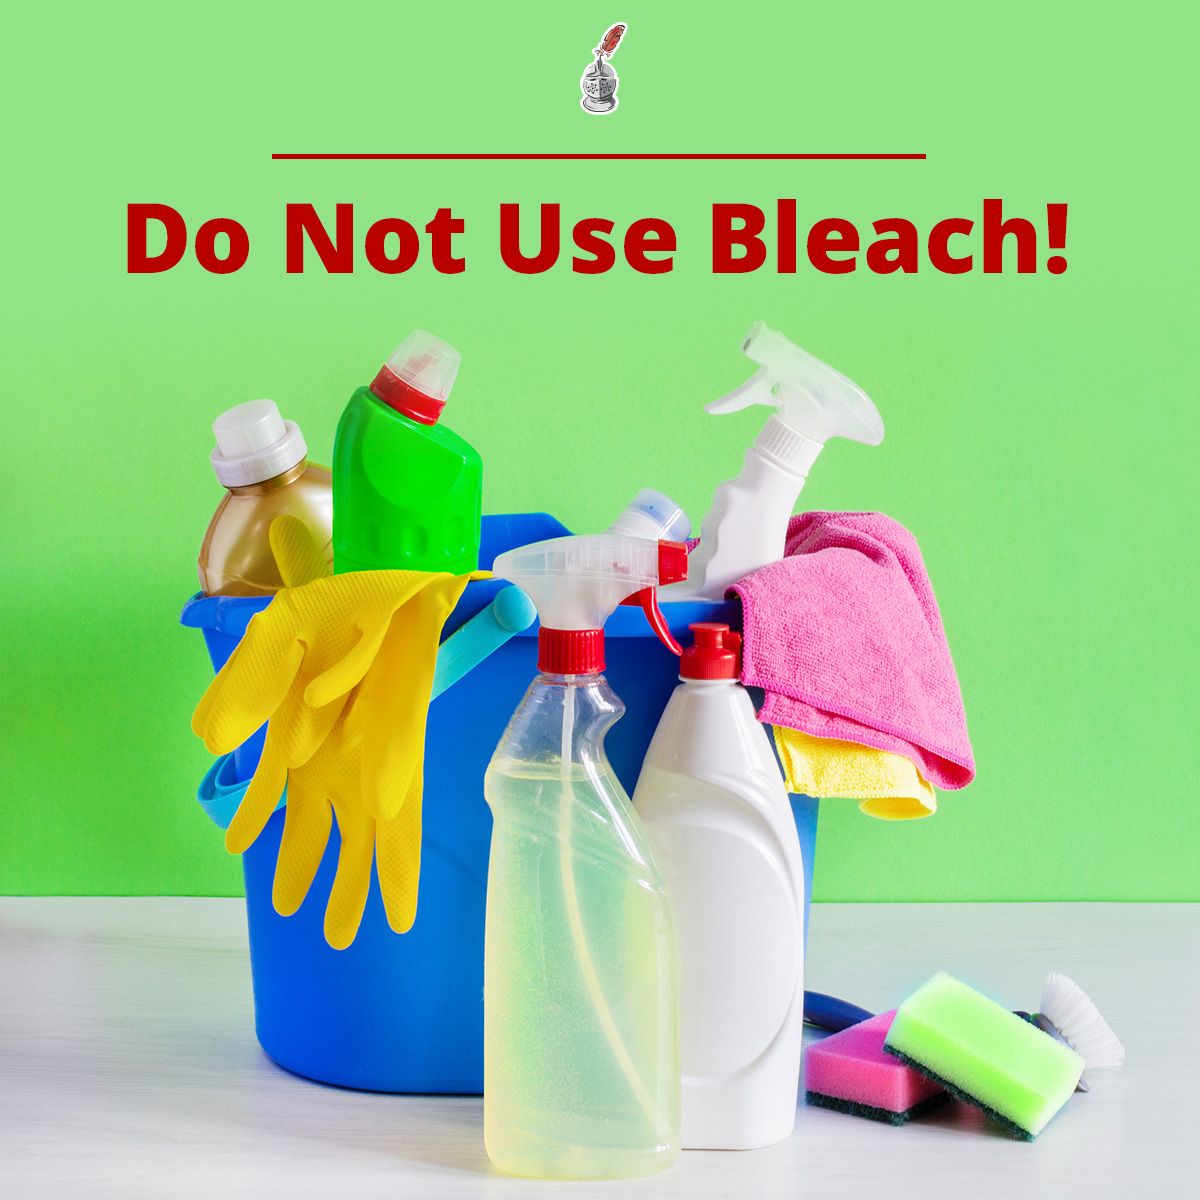 Do Not Use Bleach!